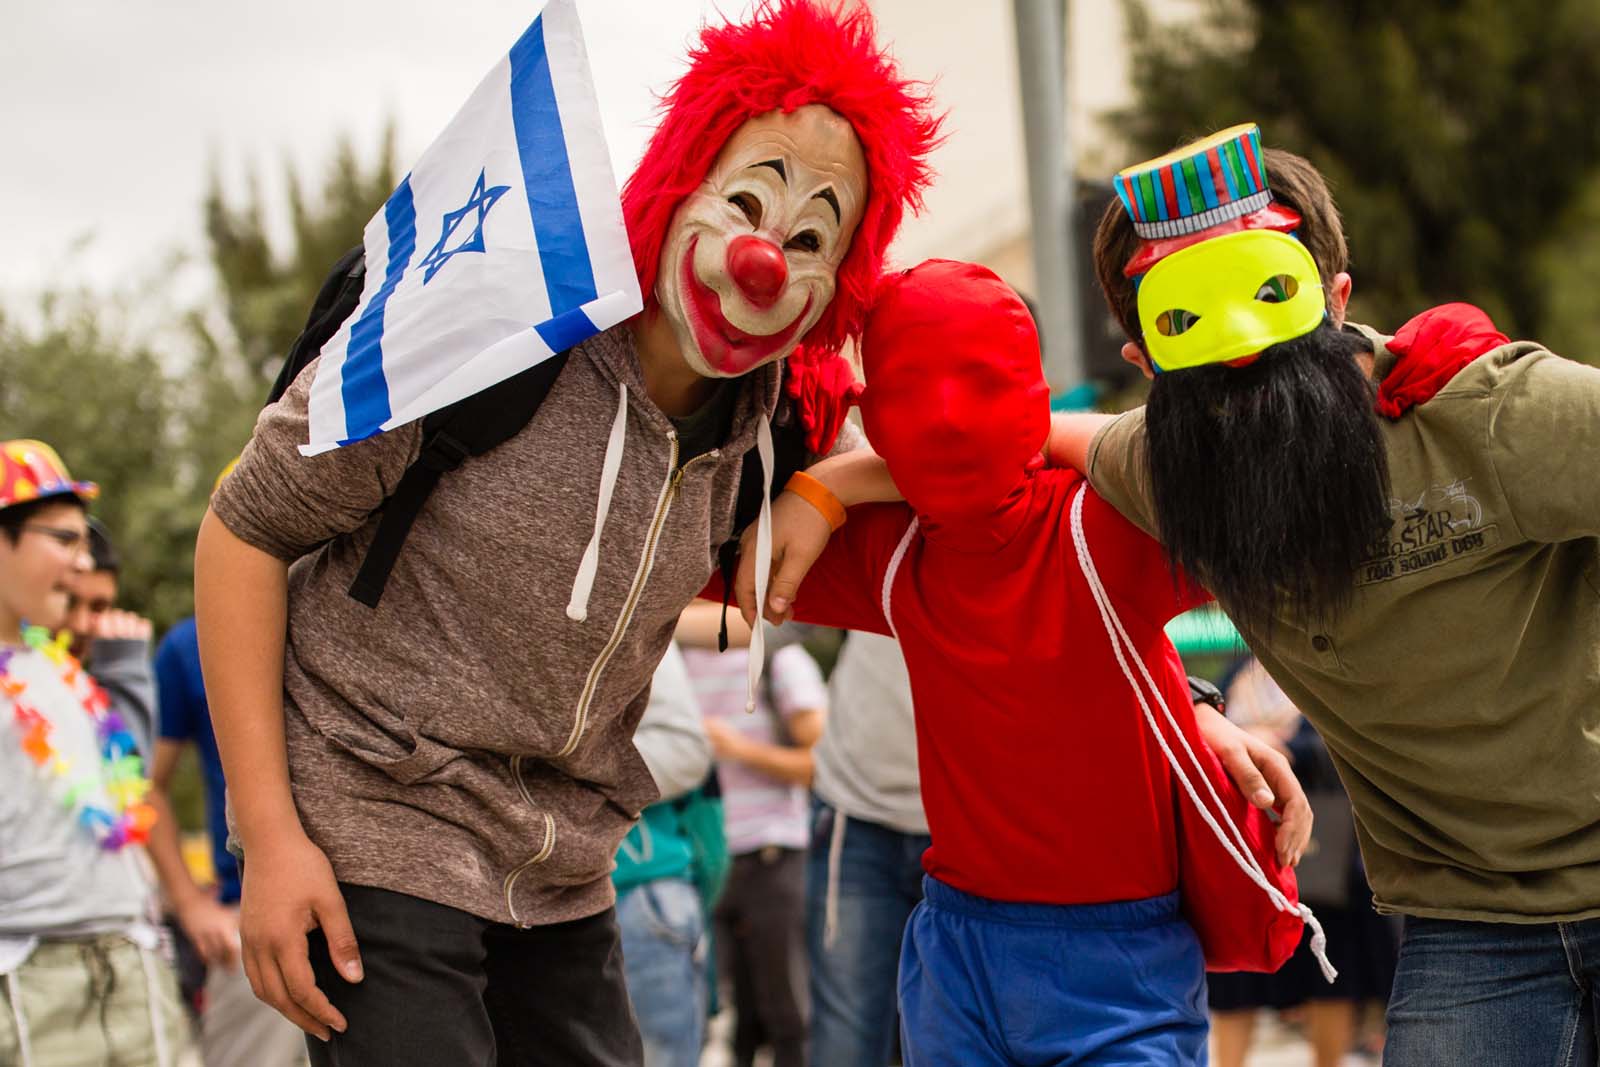 10 best places to celebrate Purim in Israel ISRAEL21c